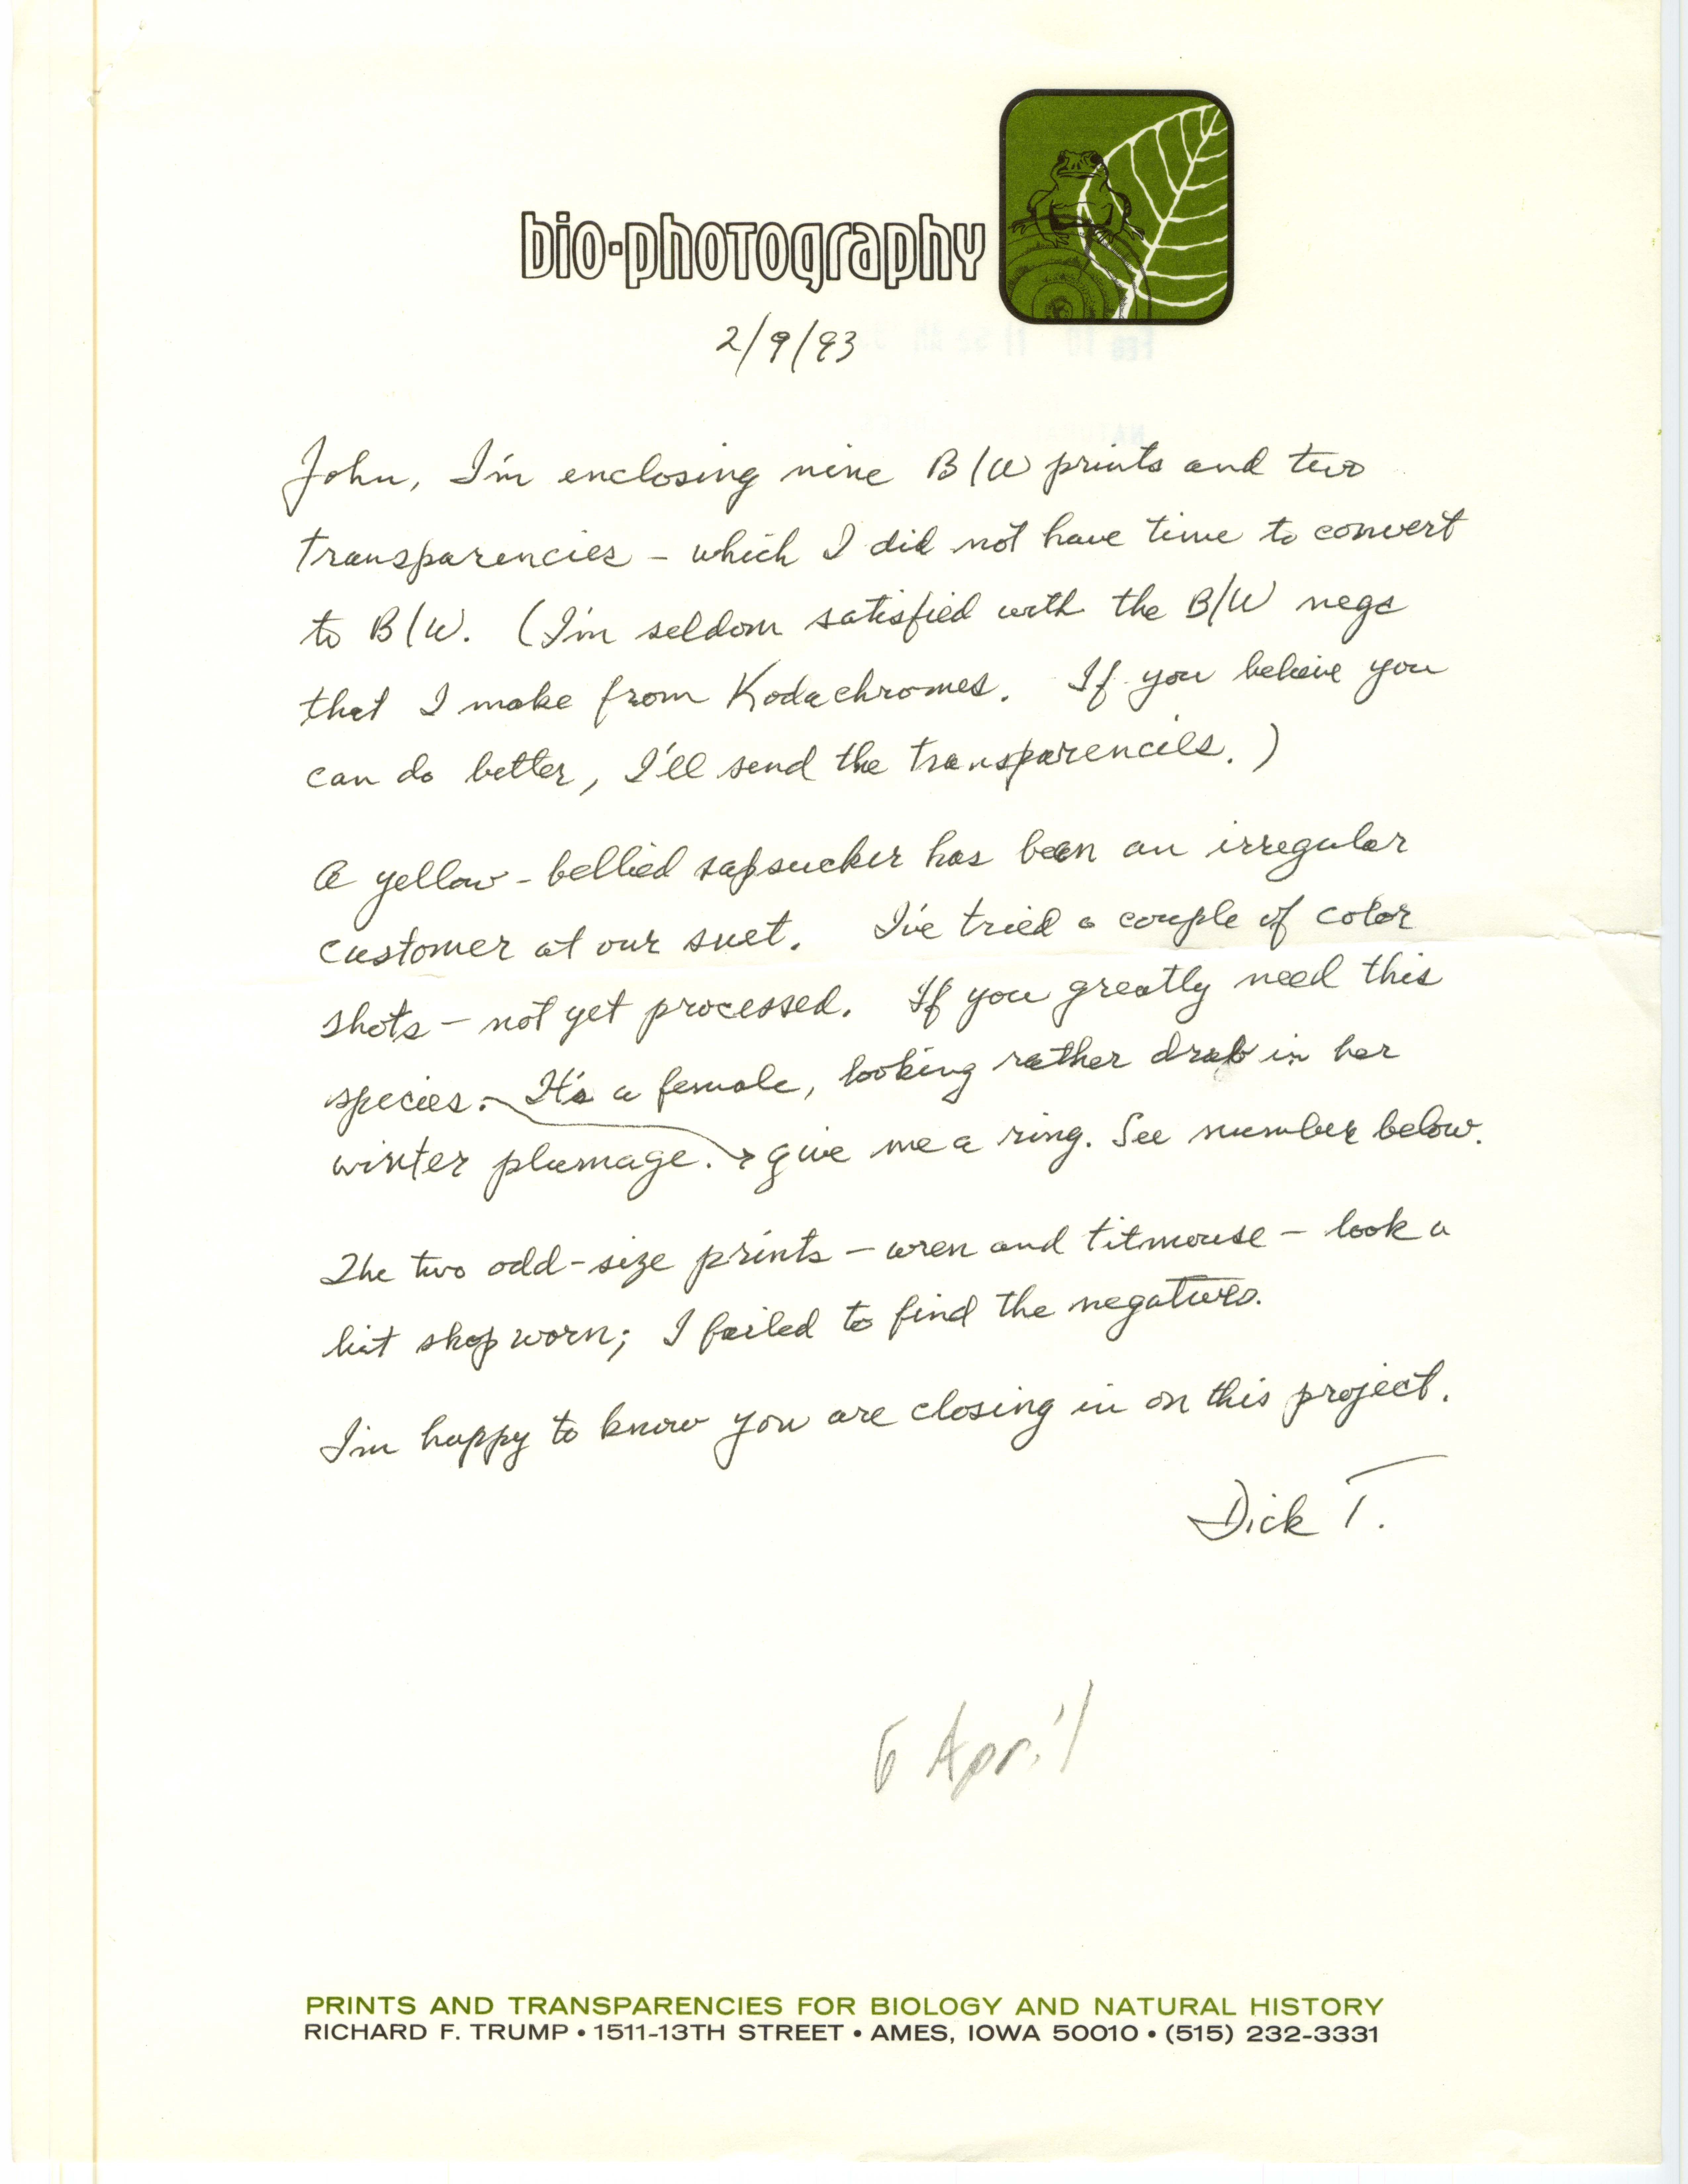 Richard F. Trump letter to John Fleckenstein regarding photographs for the Breeding Bird Atlas, February 9, 1993